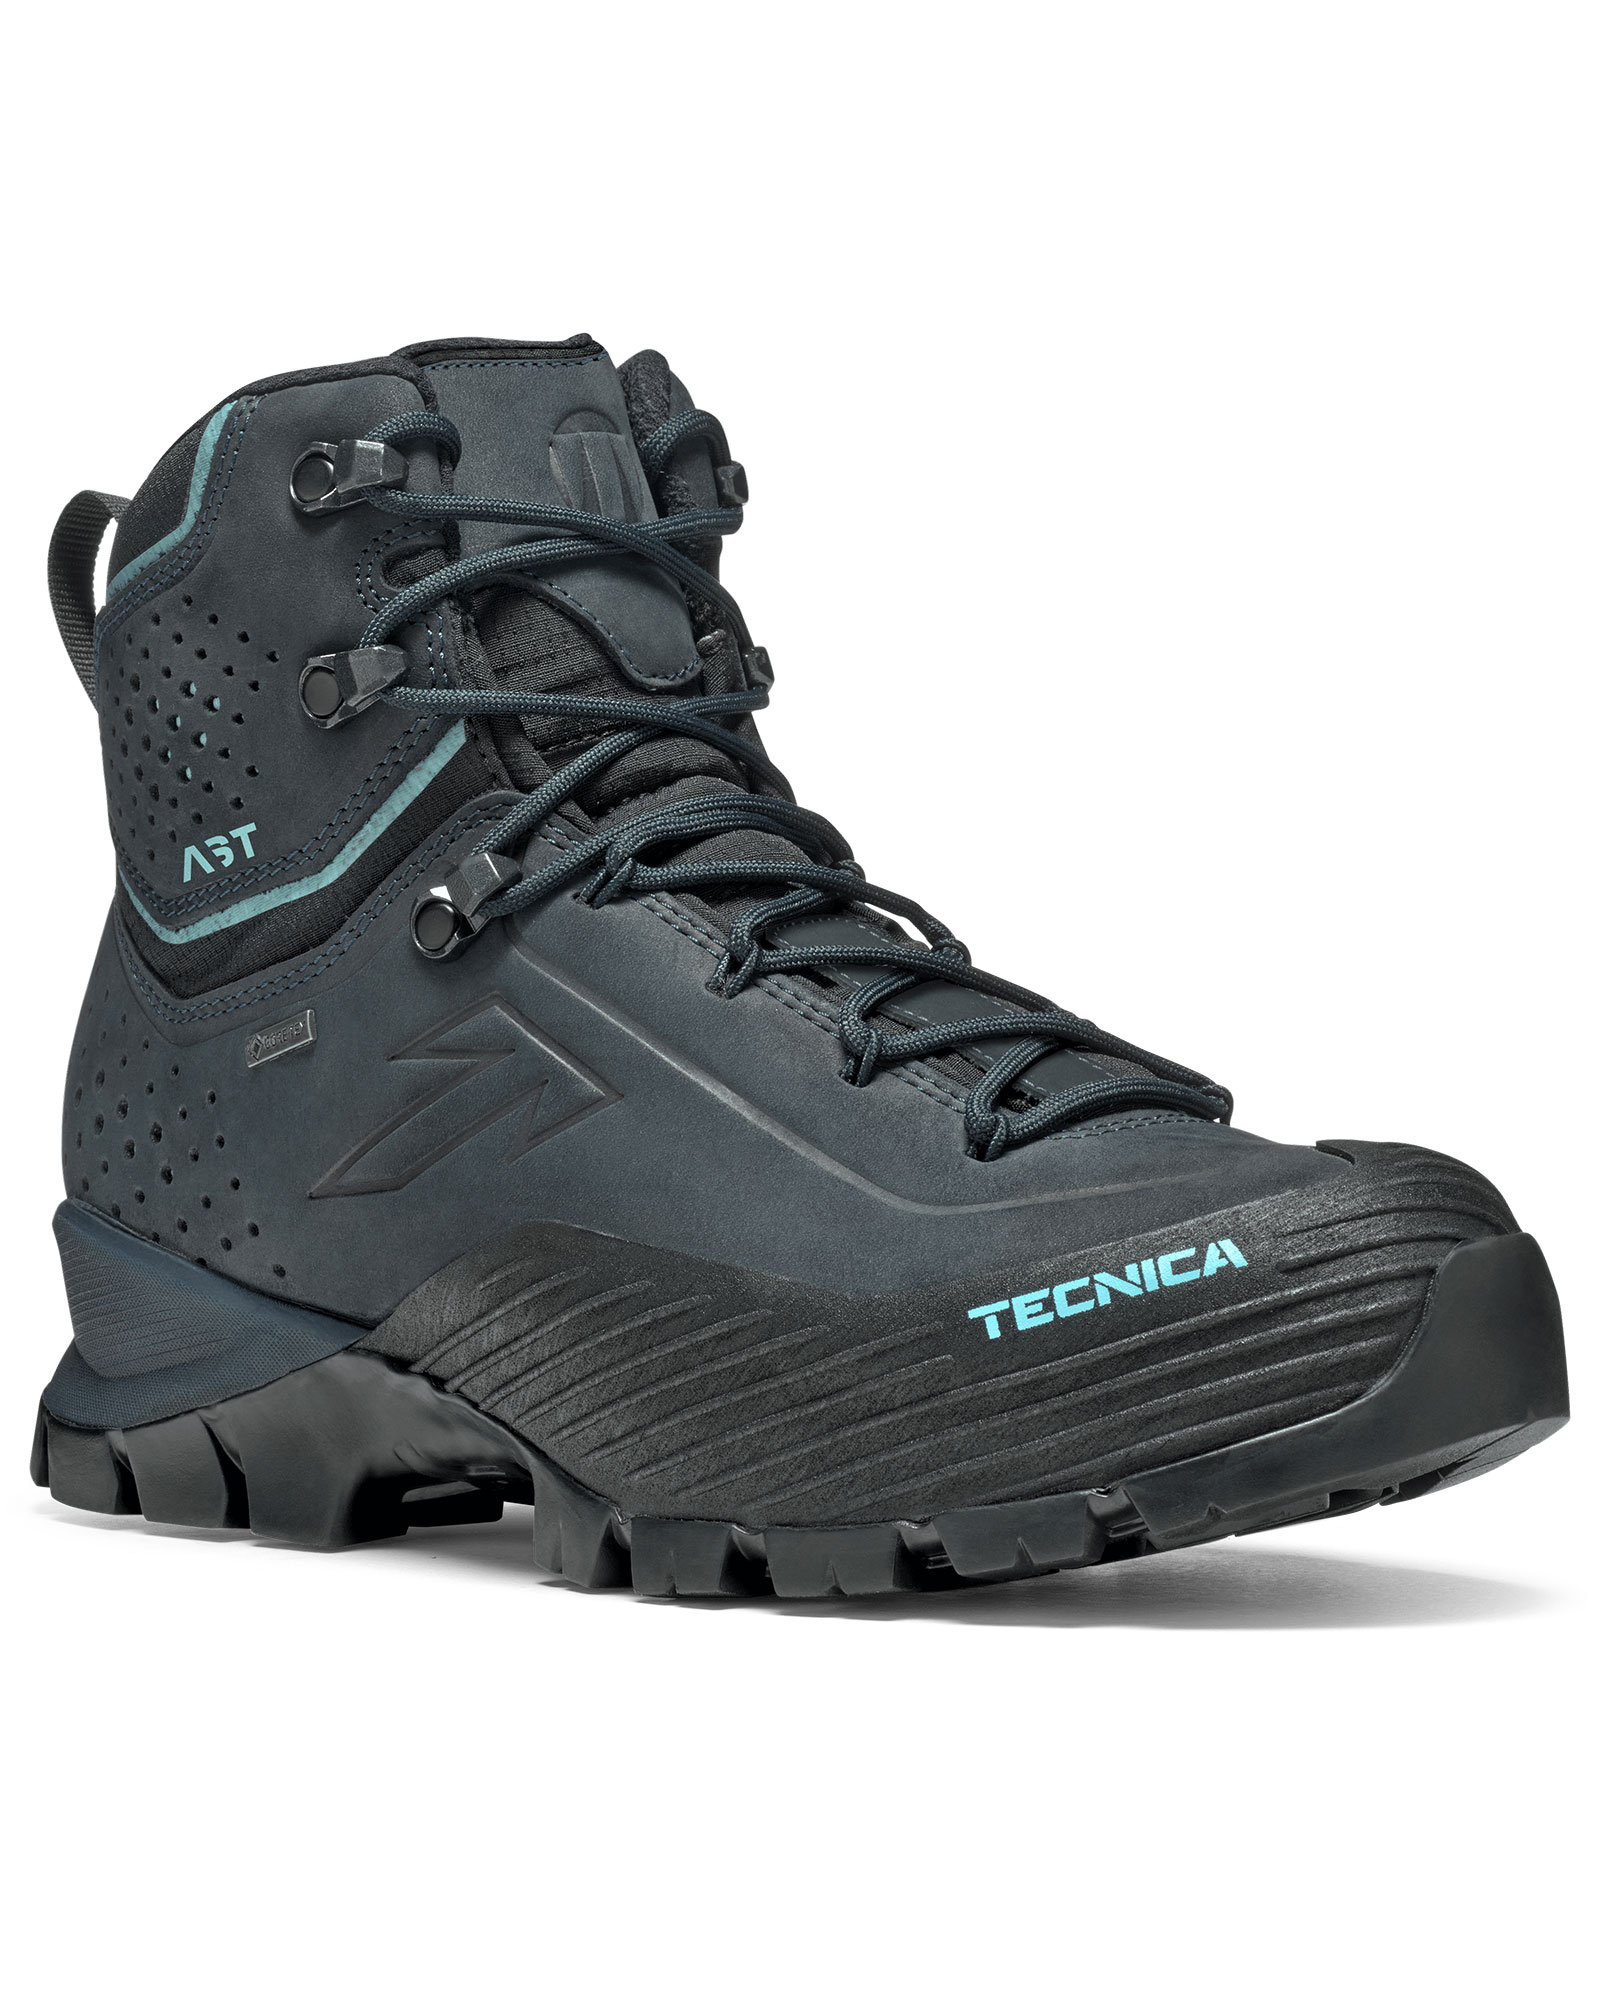 Tecnica Women's Forge 2.0 GORE-TEX Boots